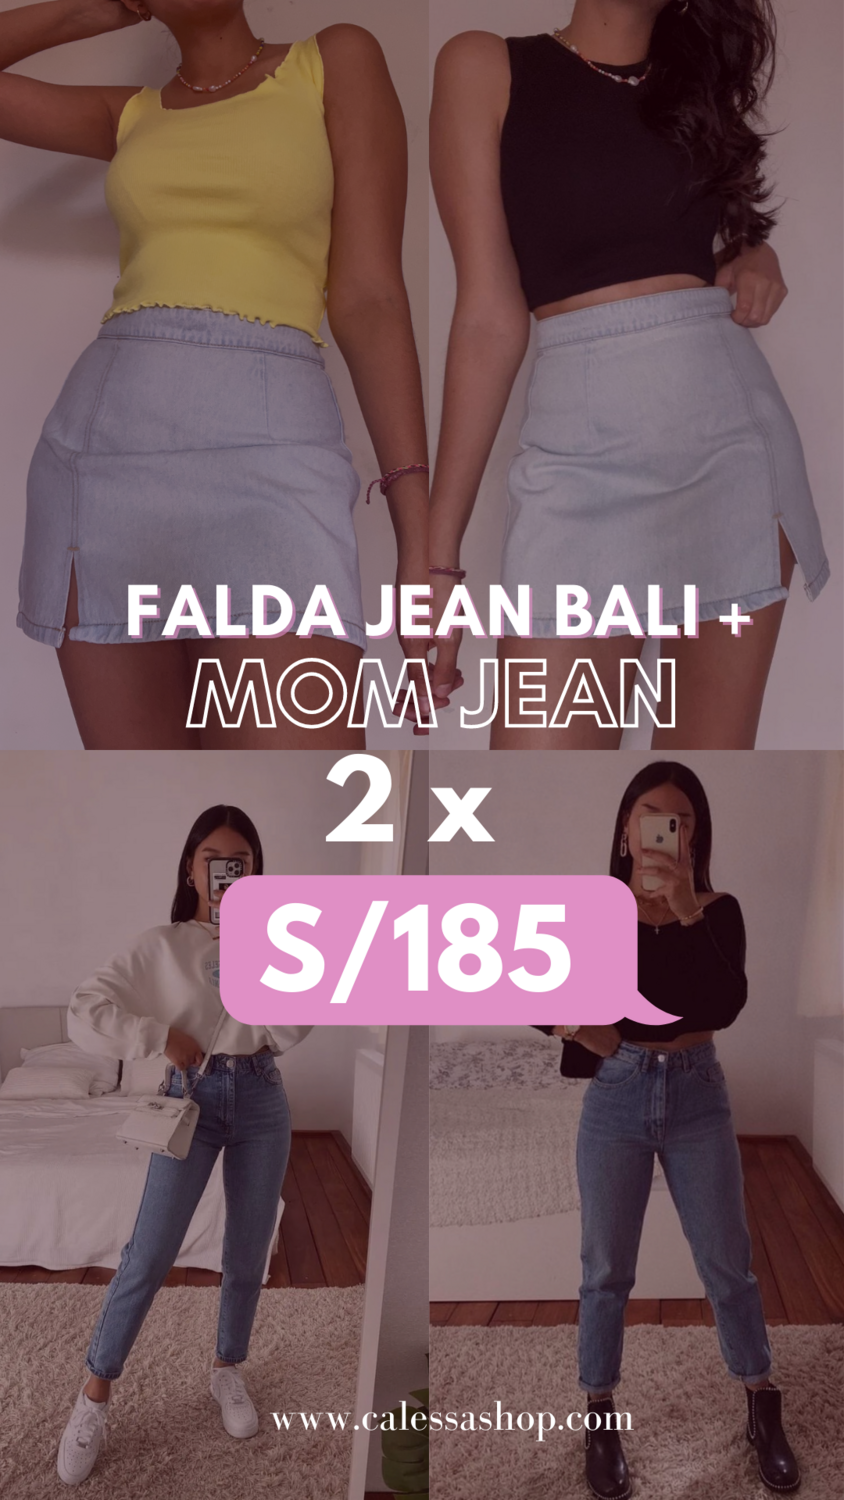 Pack 7: Mom Jean + Falda Jean Bali